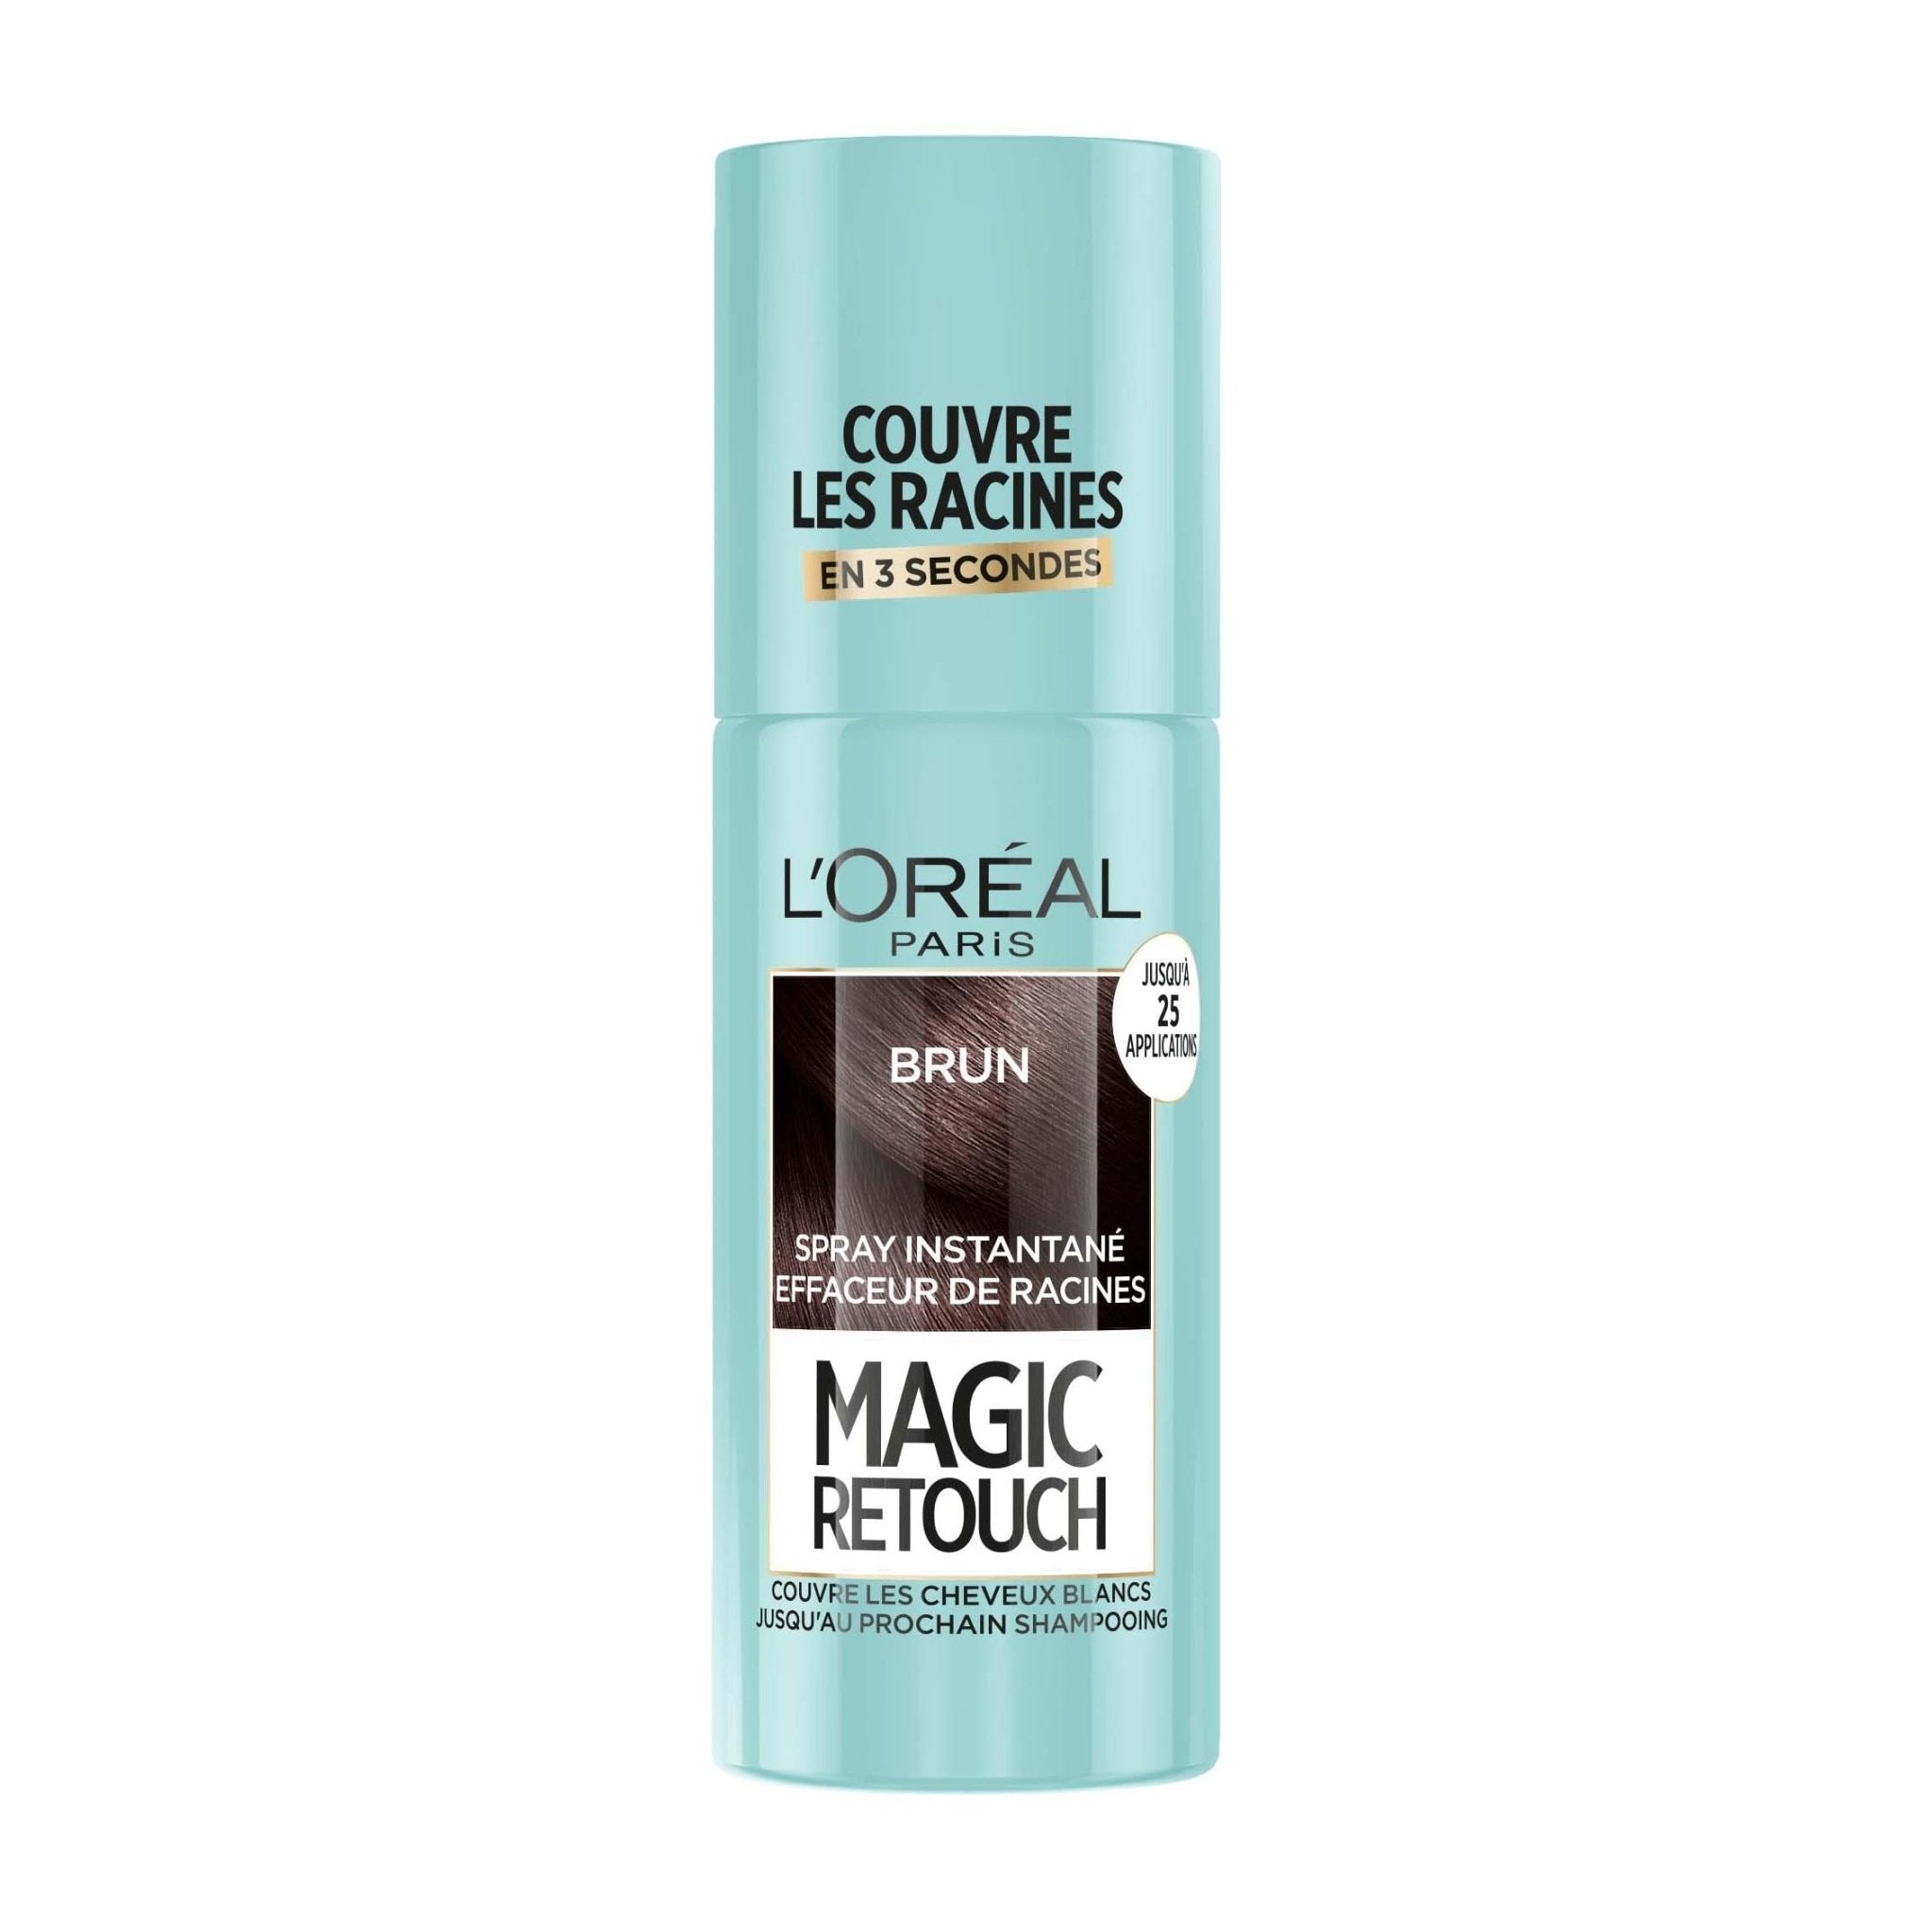 L'Oréal Magic Retouch Instant Concealer Spray 75ml - Brun - Bloom Pharmacy